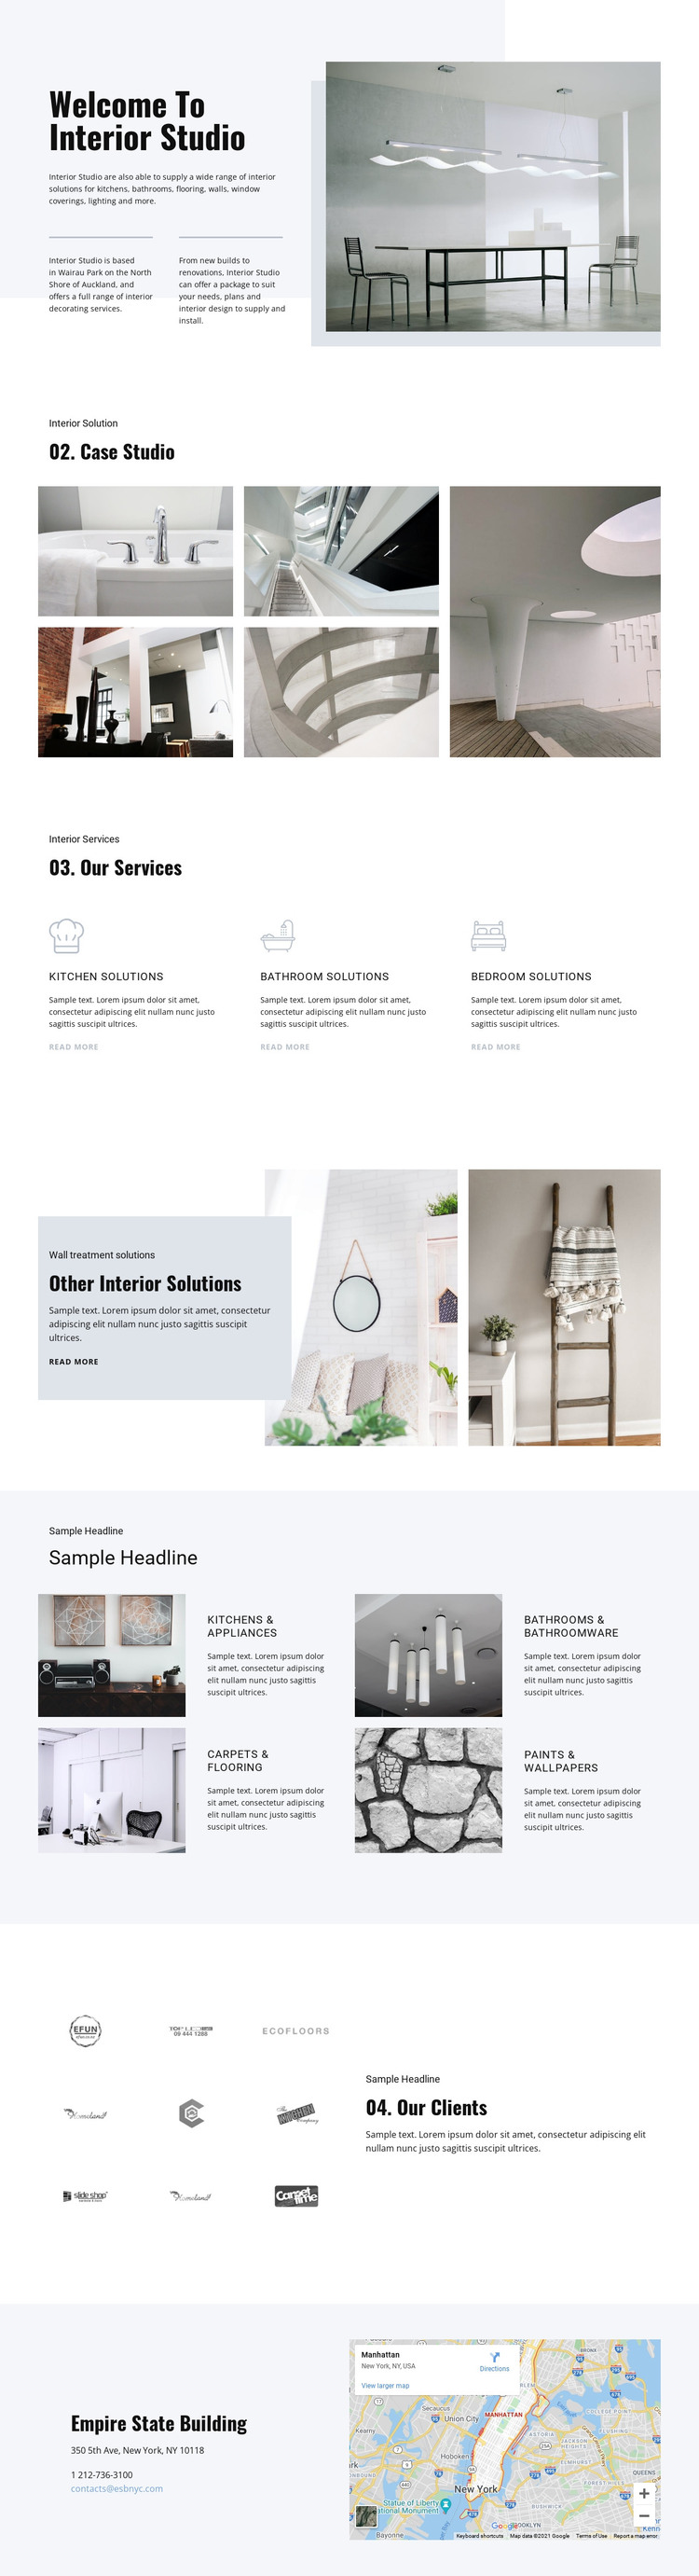 Welcome to interior studio Web Design